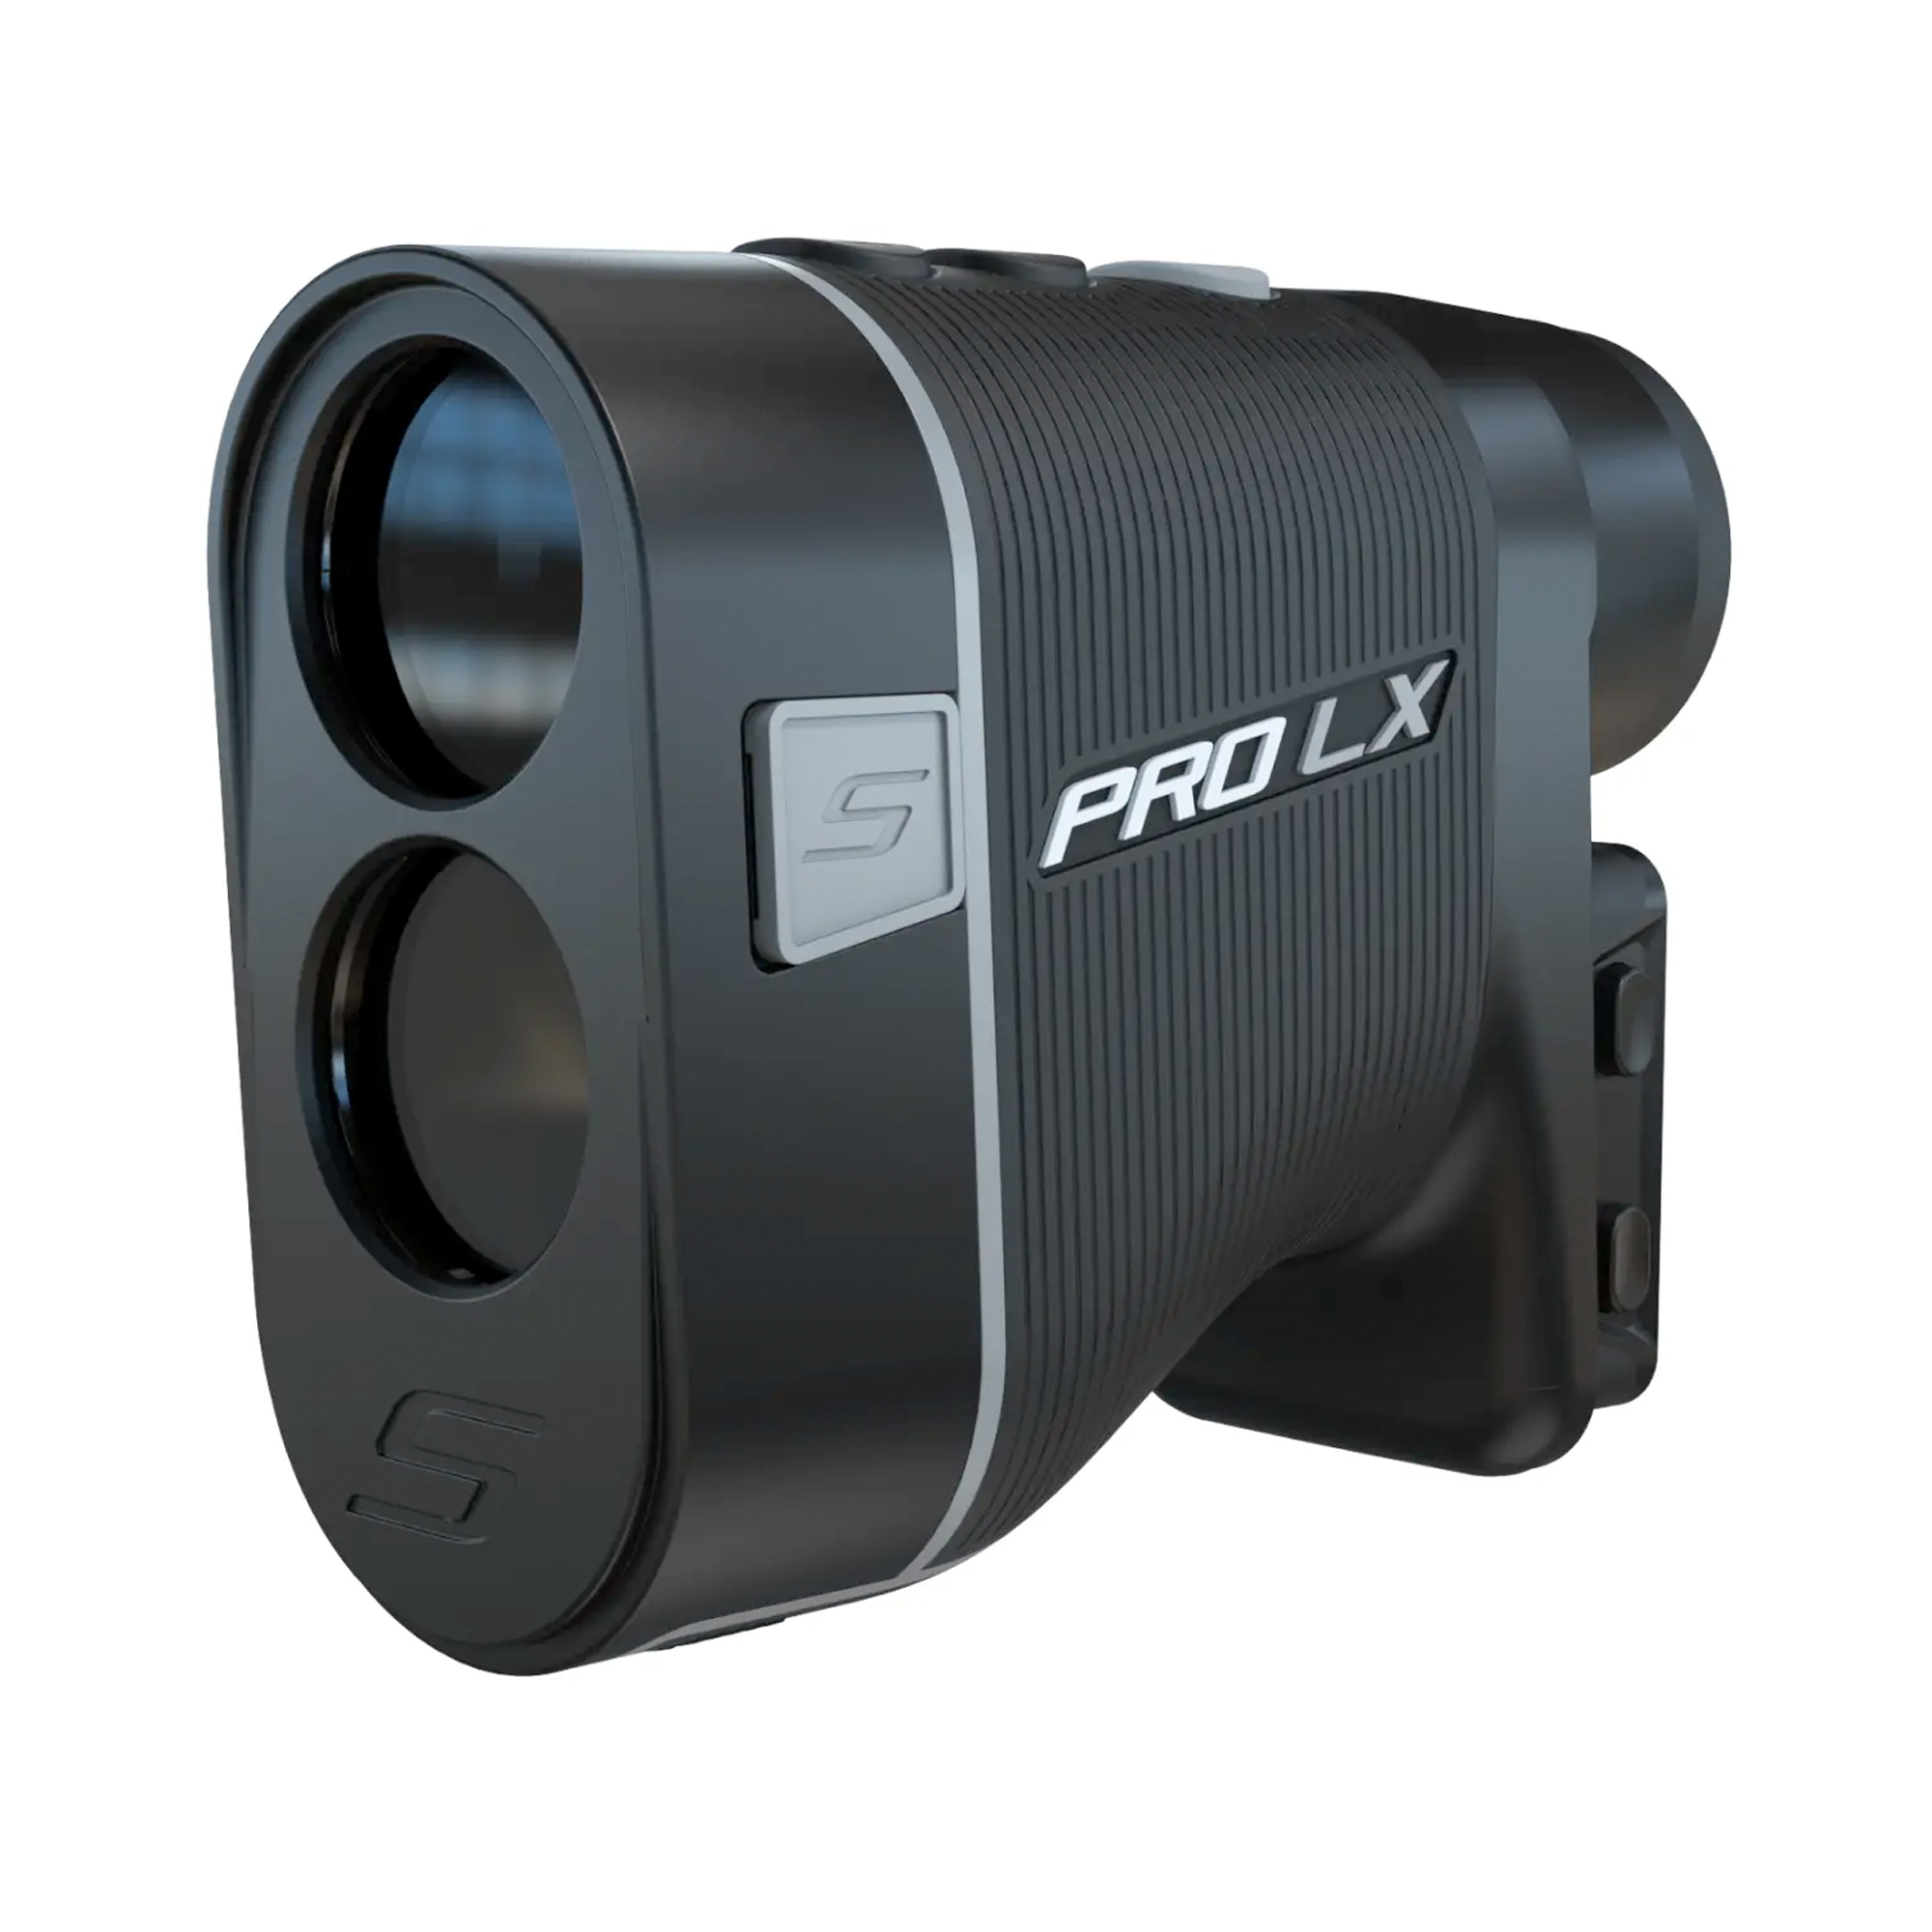 Shot Scope PRO LX + Laser Rangefinder, GPS & Performance Tracking Tags 